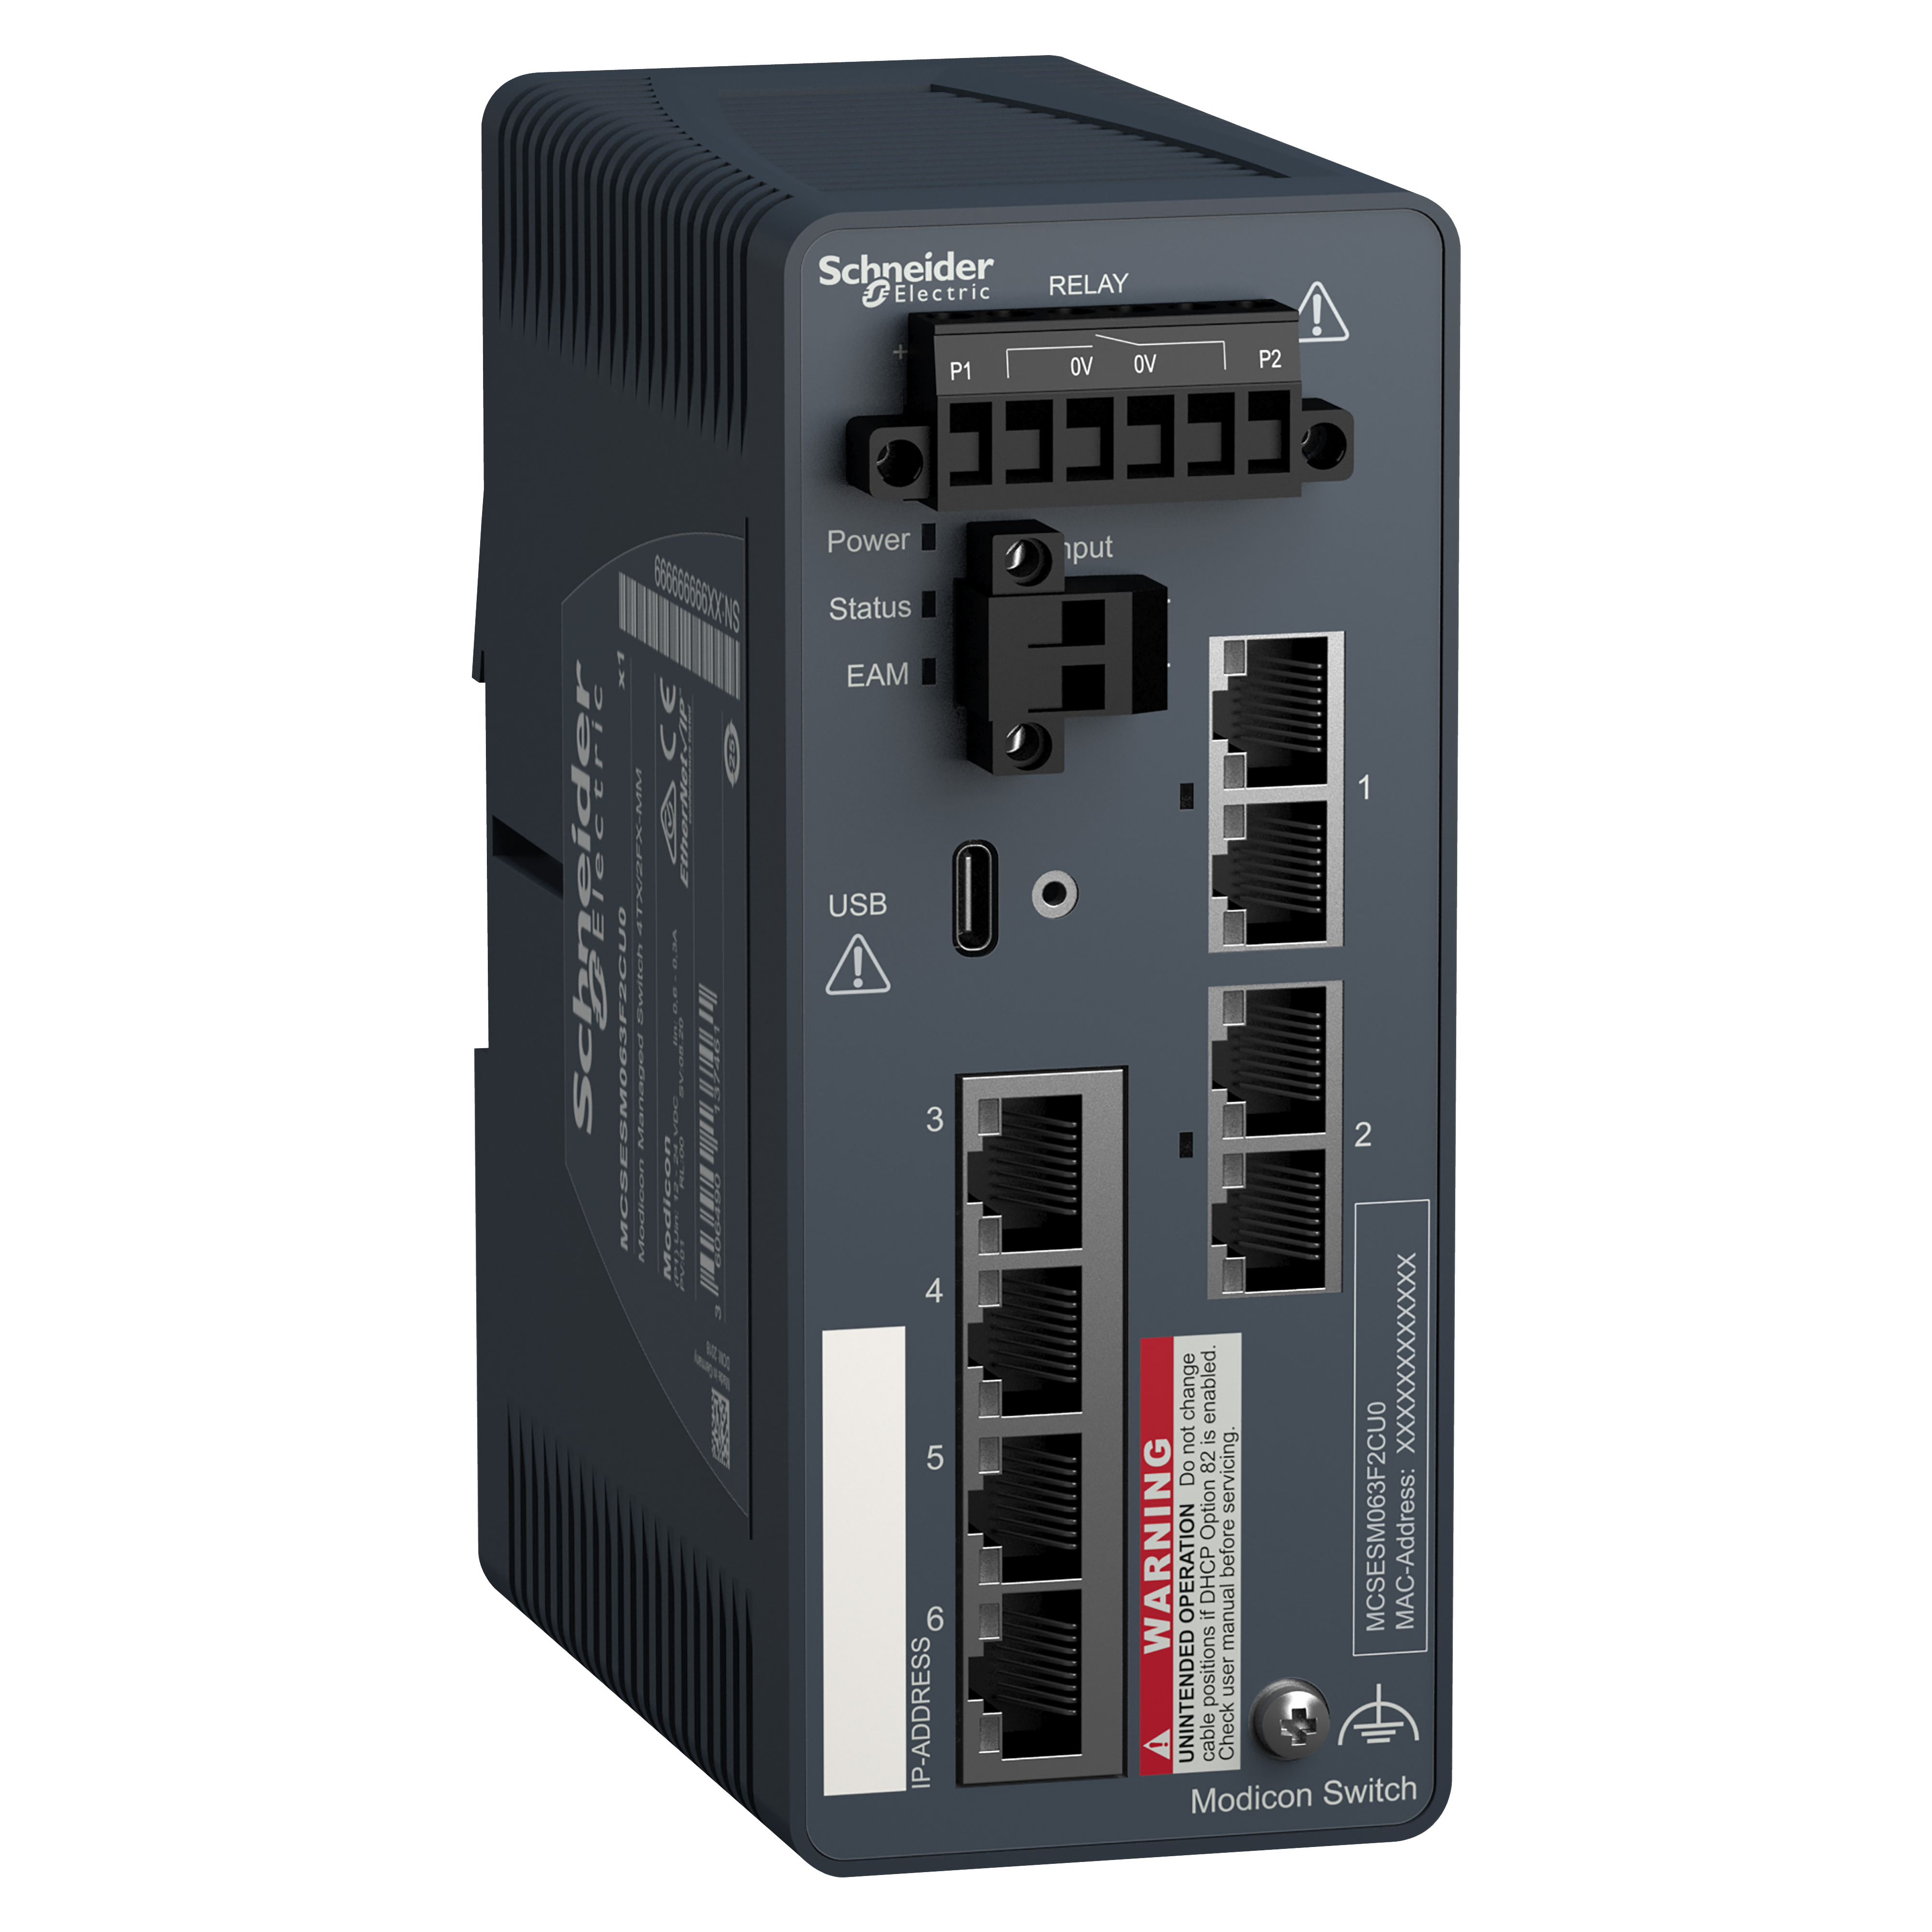 Modicon: Ethernet TCP/IP upravljivi switch - 4 porta za bakar + 2 porta za opticki kabl